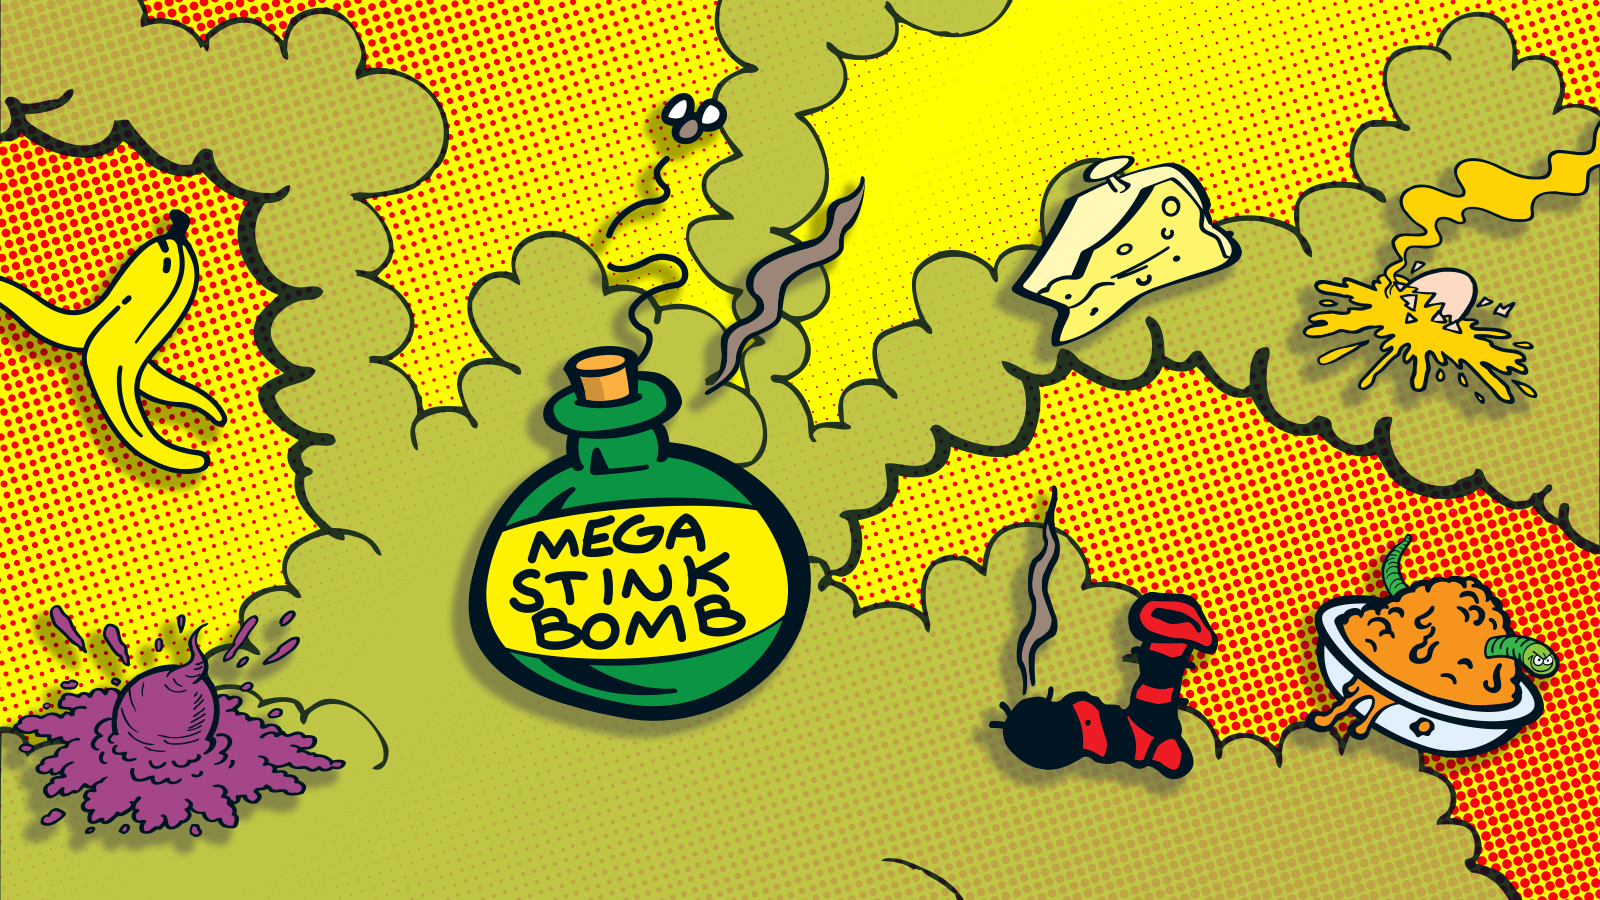 Make a Stink Bomb!